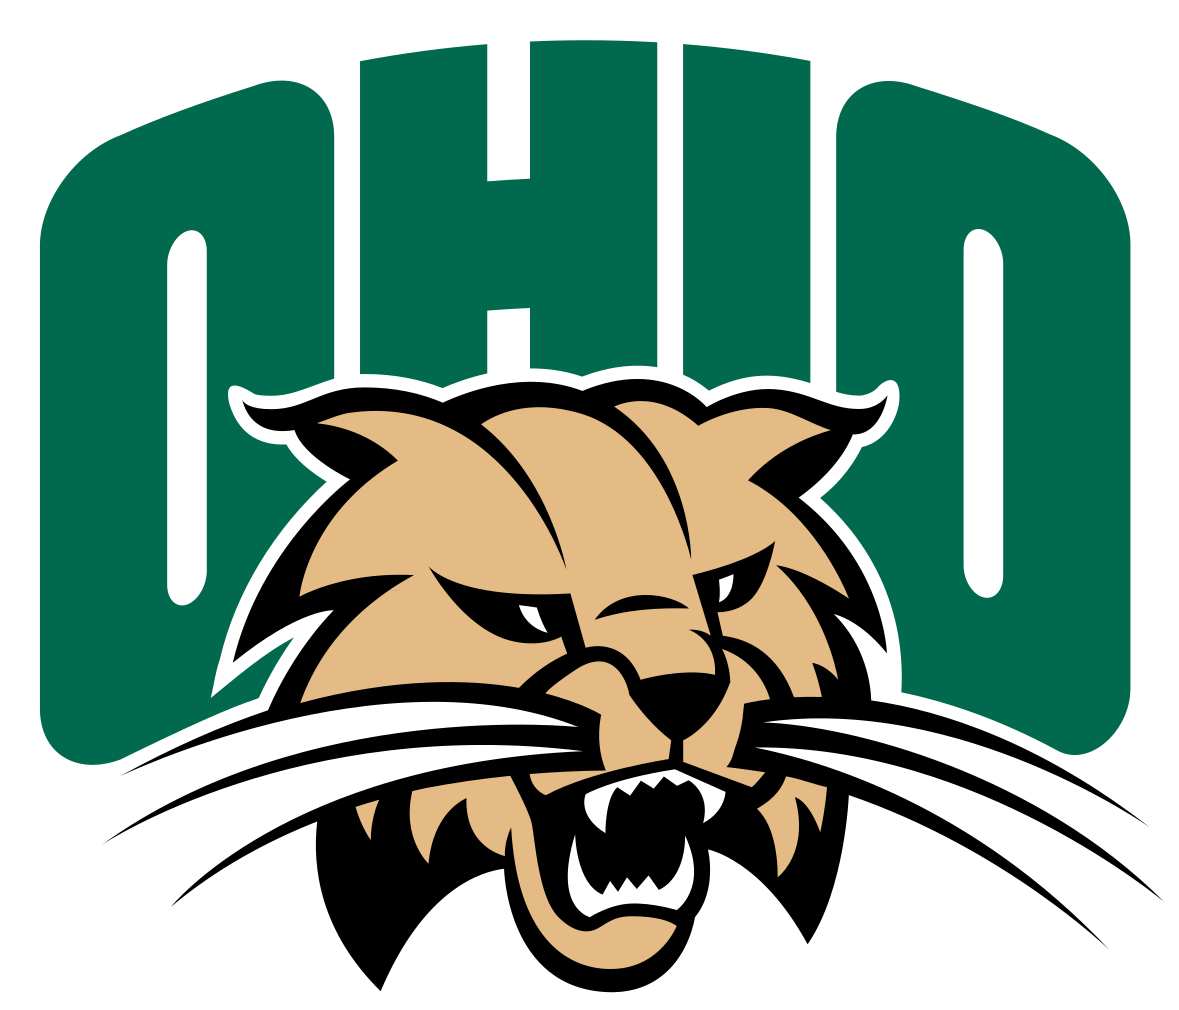 Ohio University Bobcats (1200x1030)